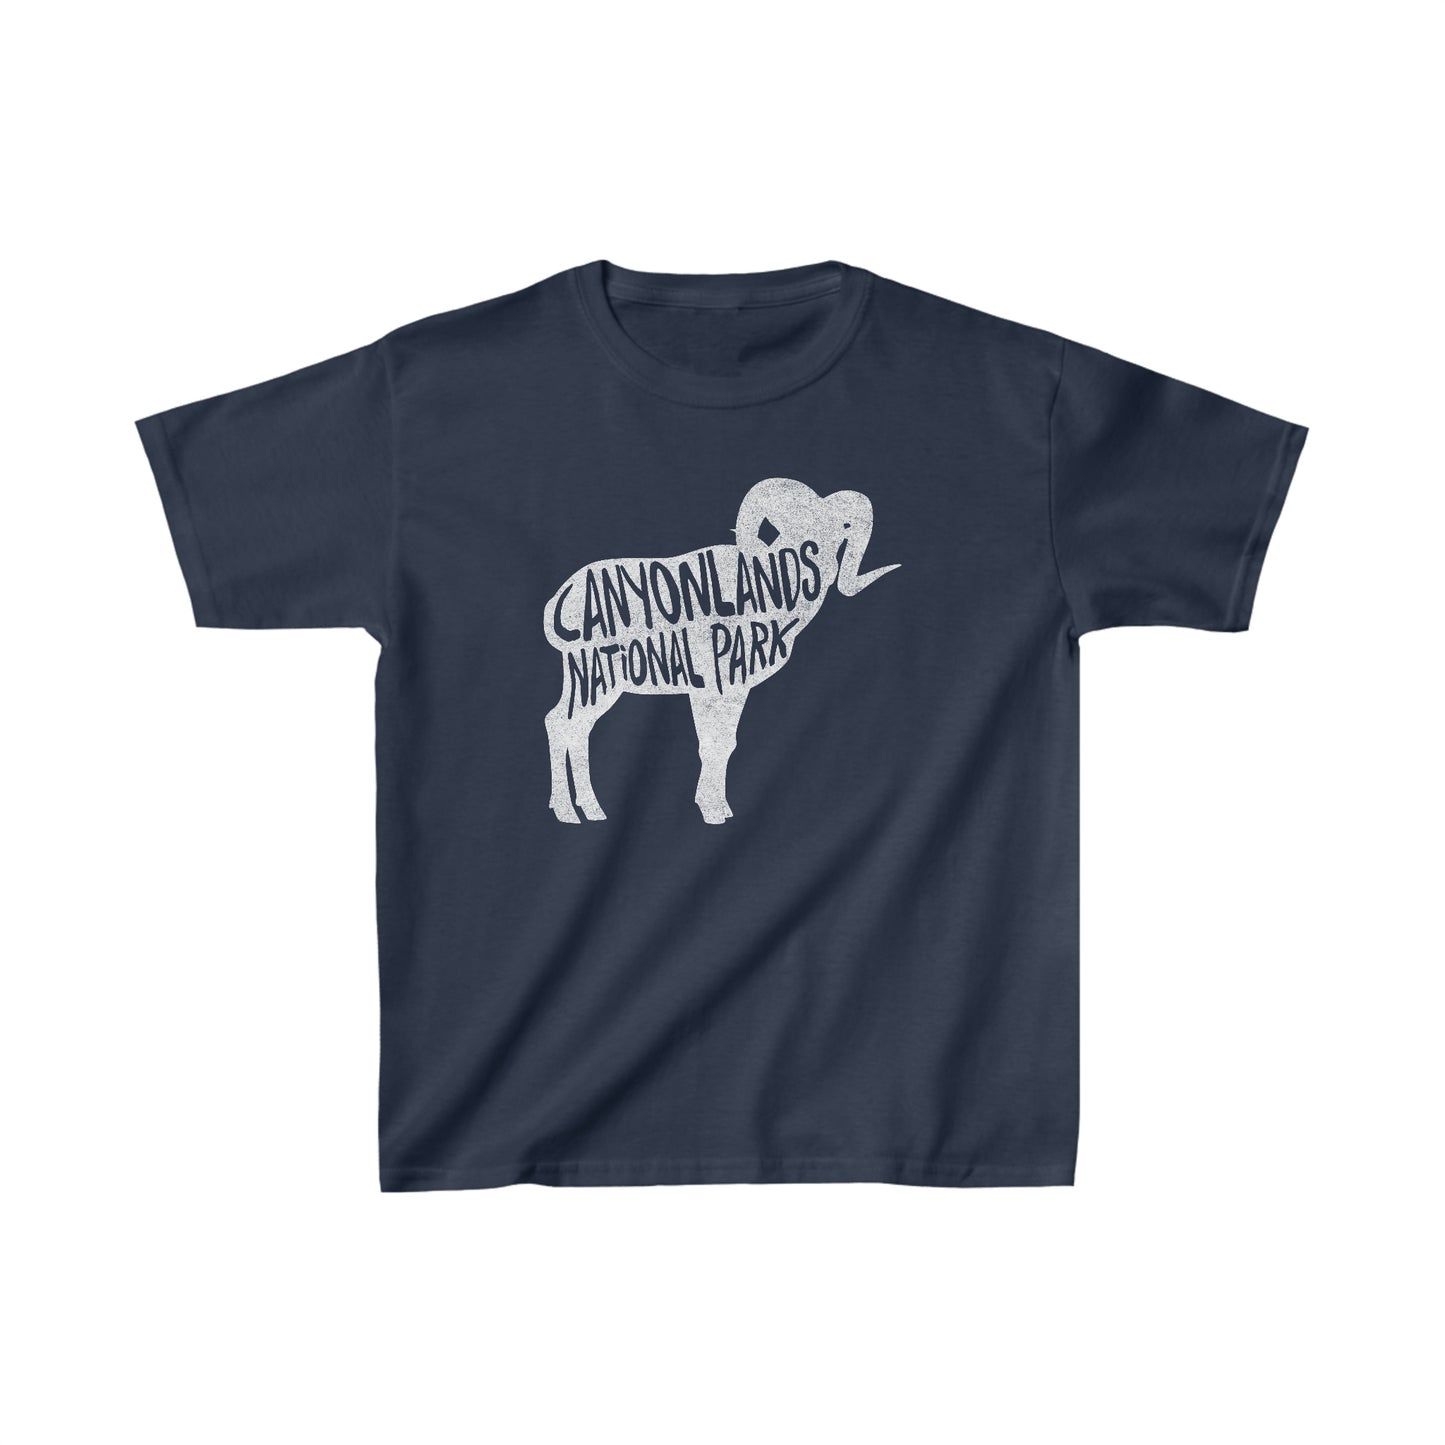 Canyonlands National Park Child T-Shirt - Bighorn Sheep